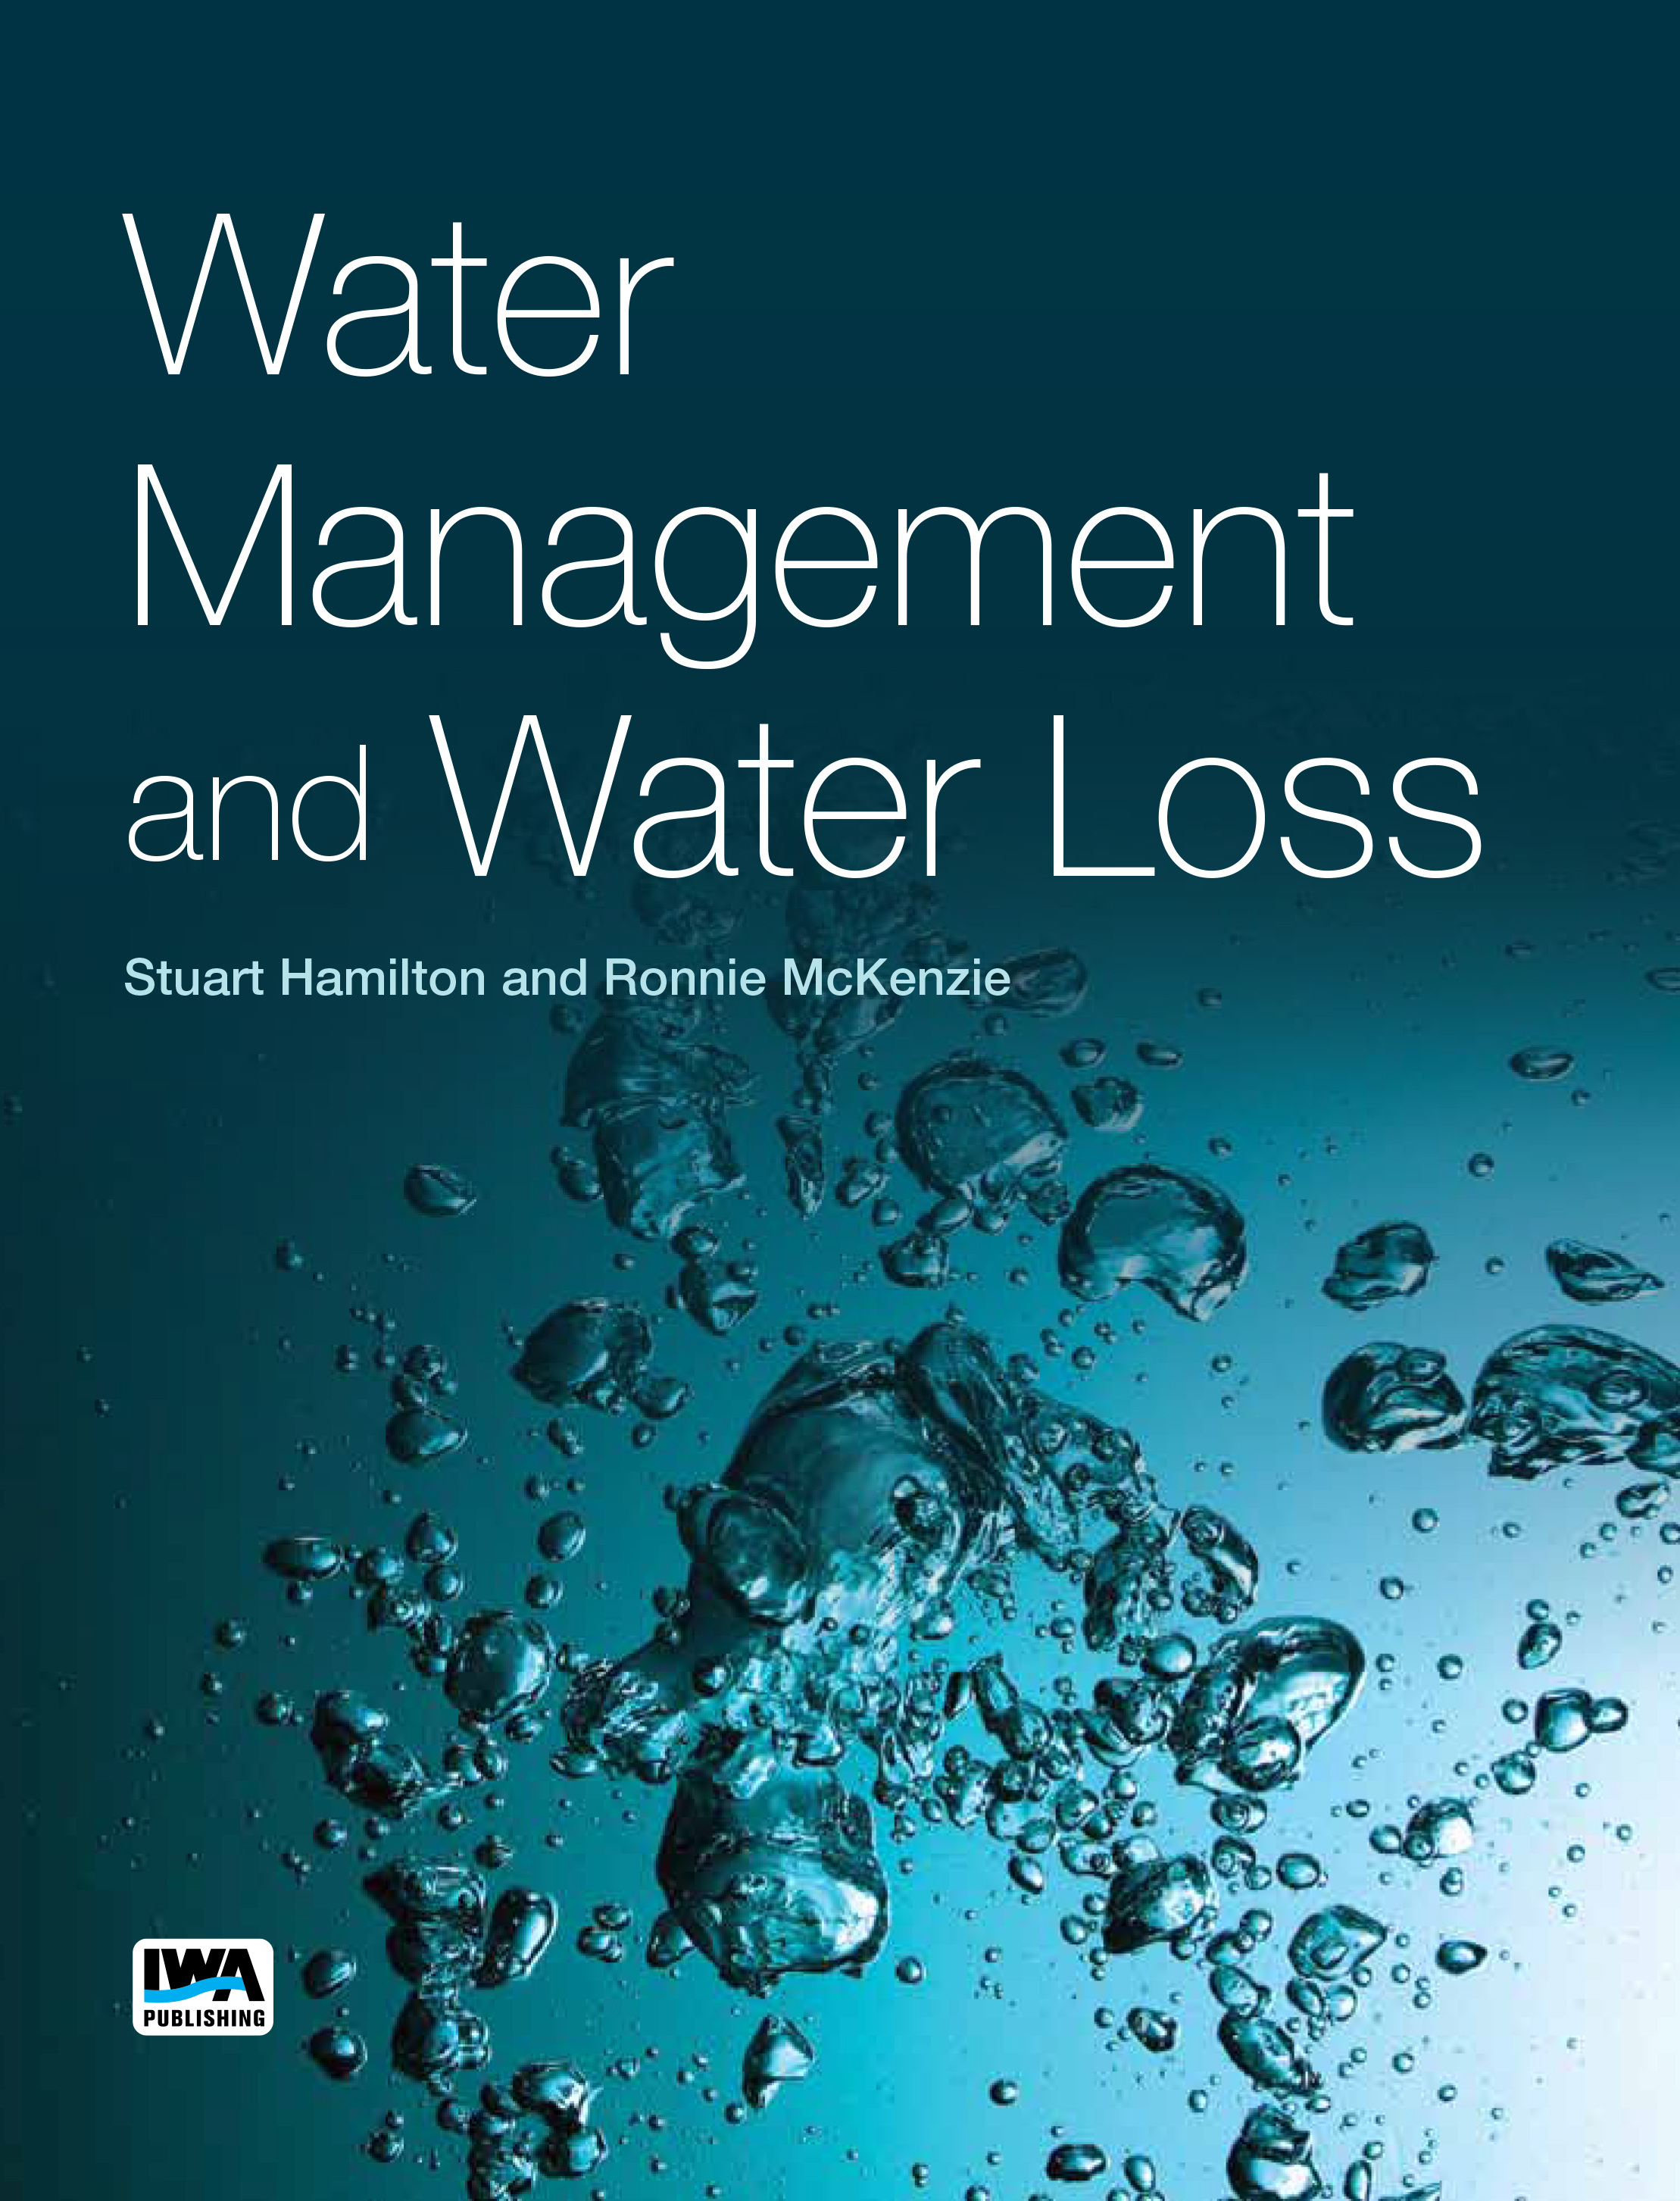 case study water management